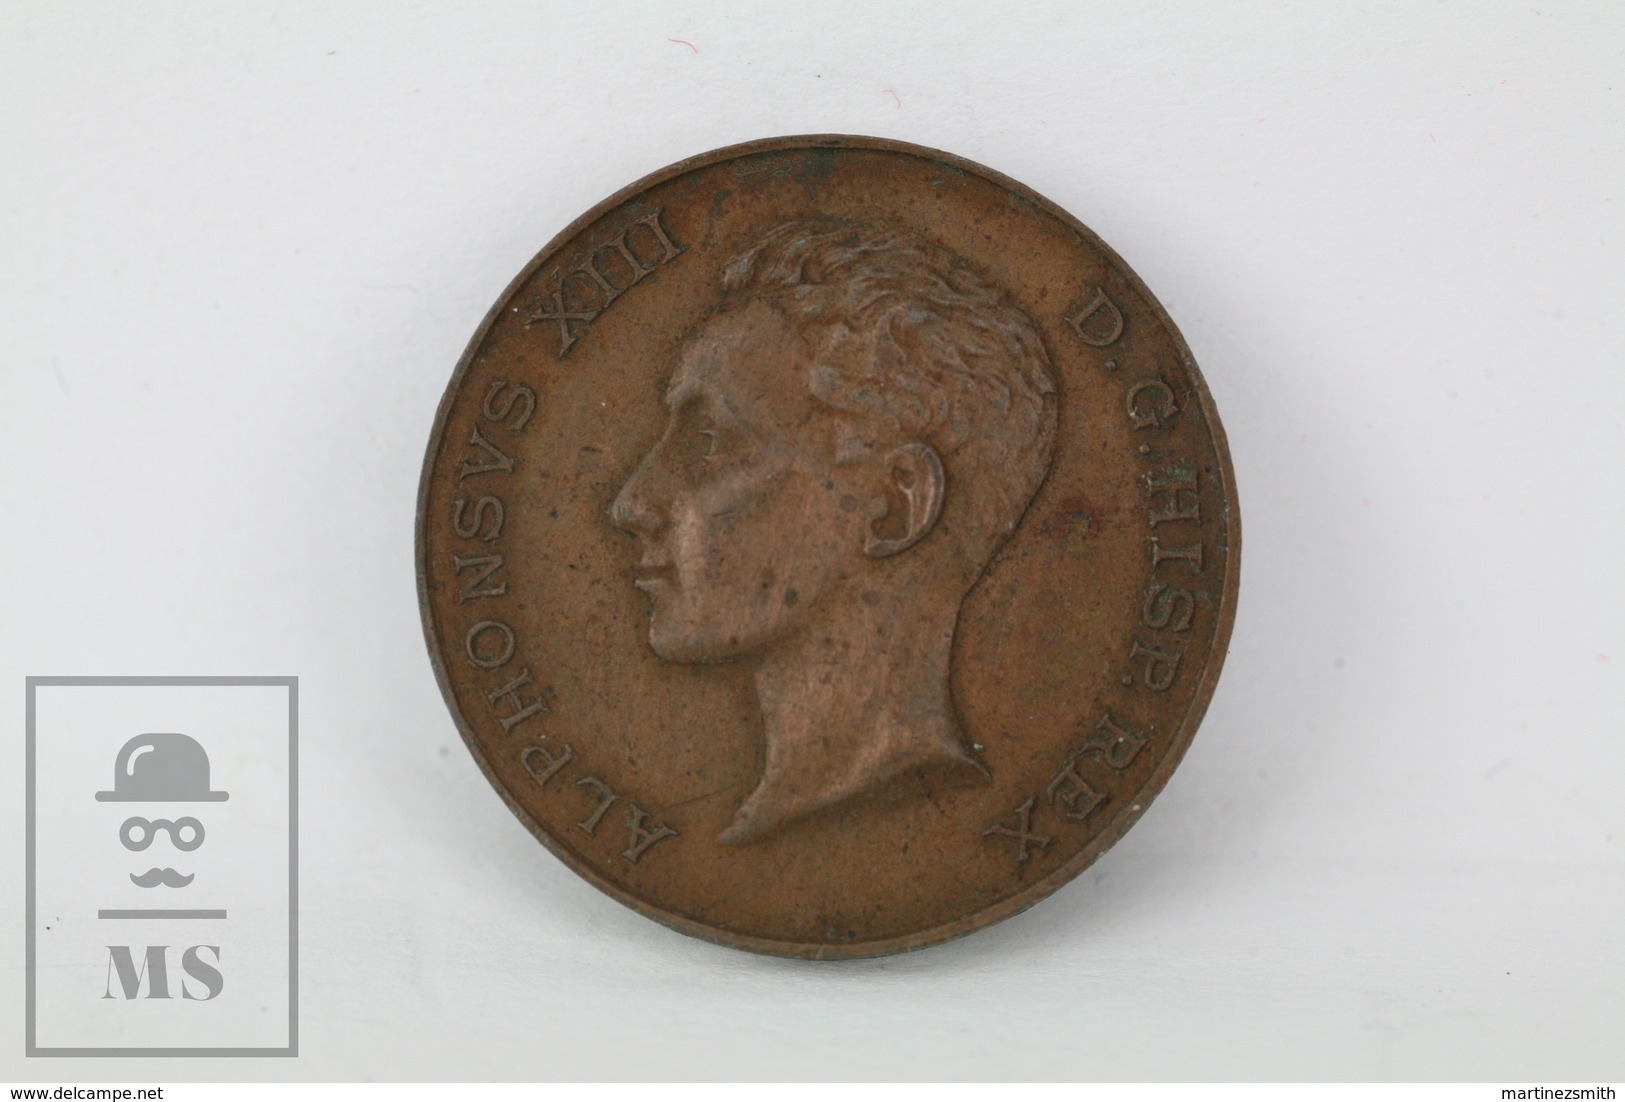 Alfonso XIII Commemorative Bronze Medal - Dated 17 May 1902 - Monarquía/ Nobleza